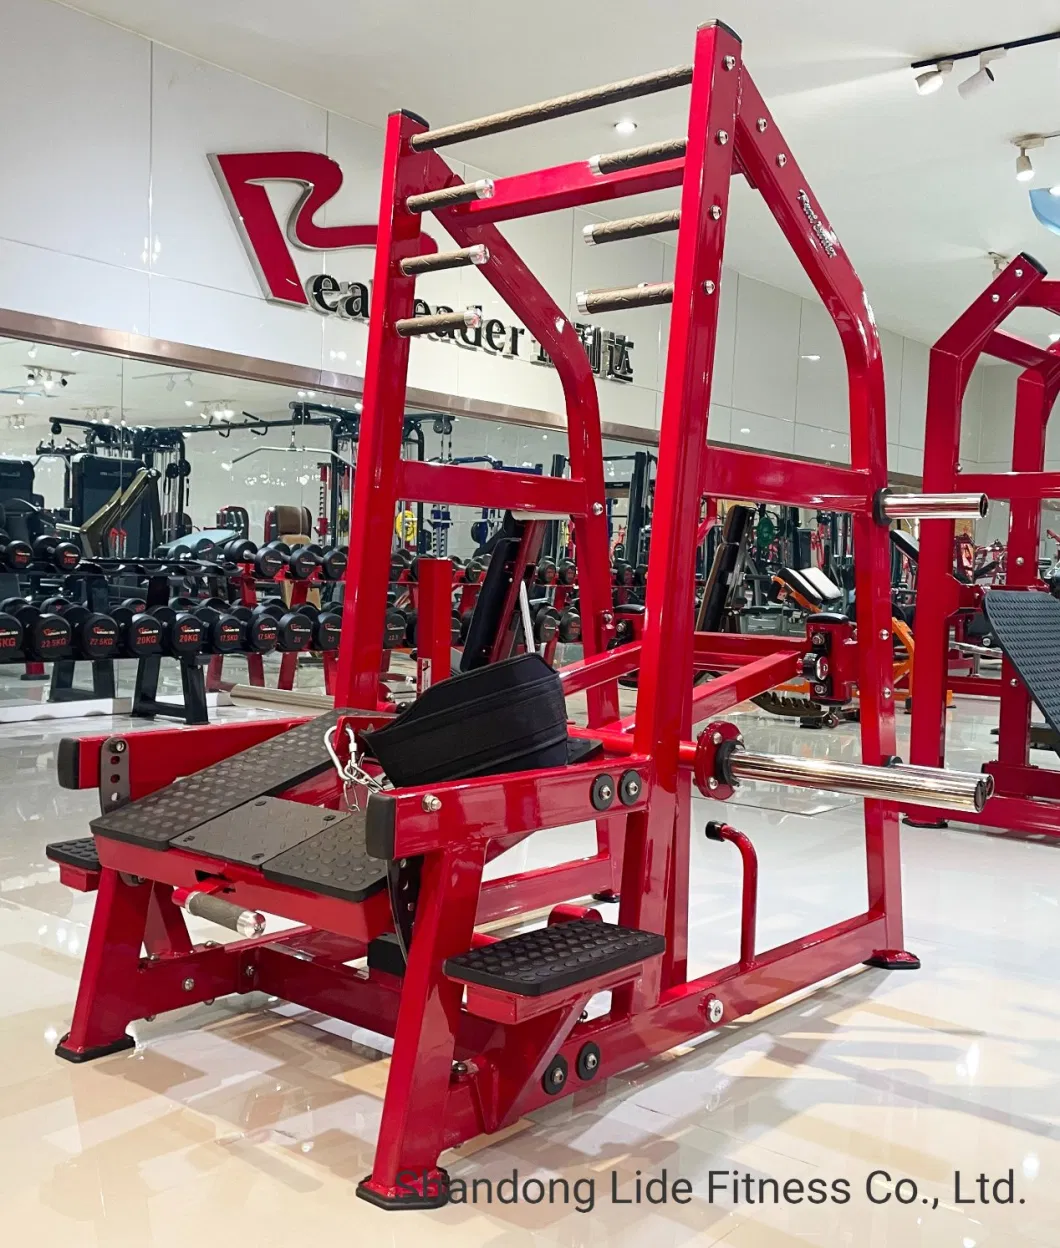 Belt Squat Strength Machine Commercial Gym Equipment Fitness Body Building